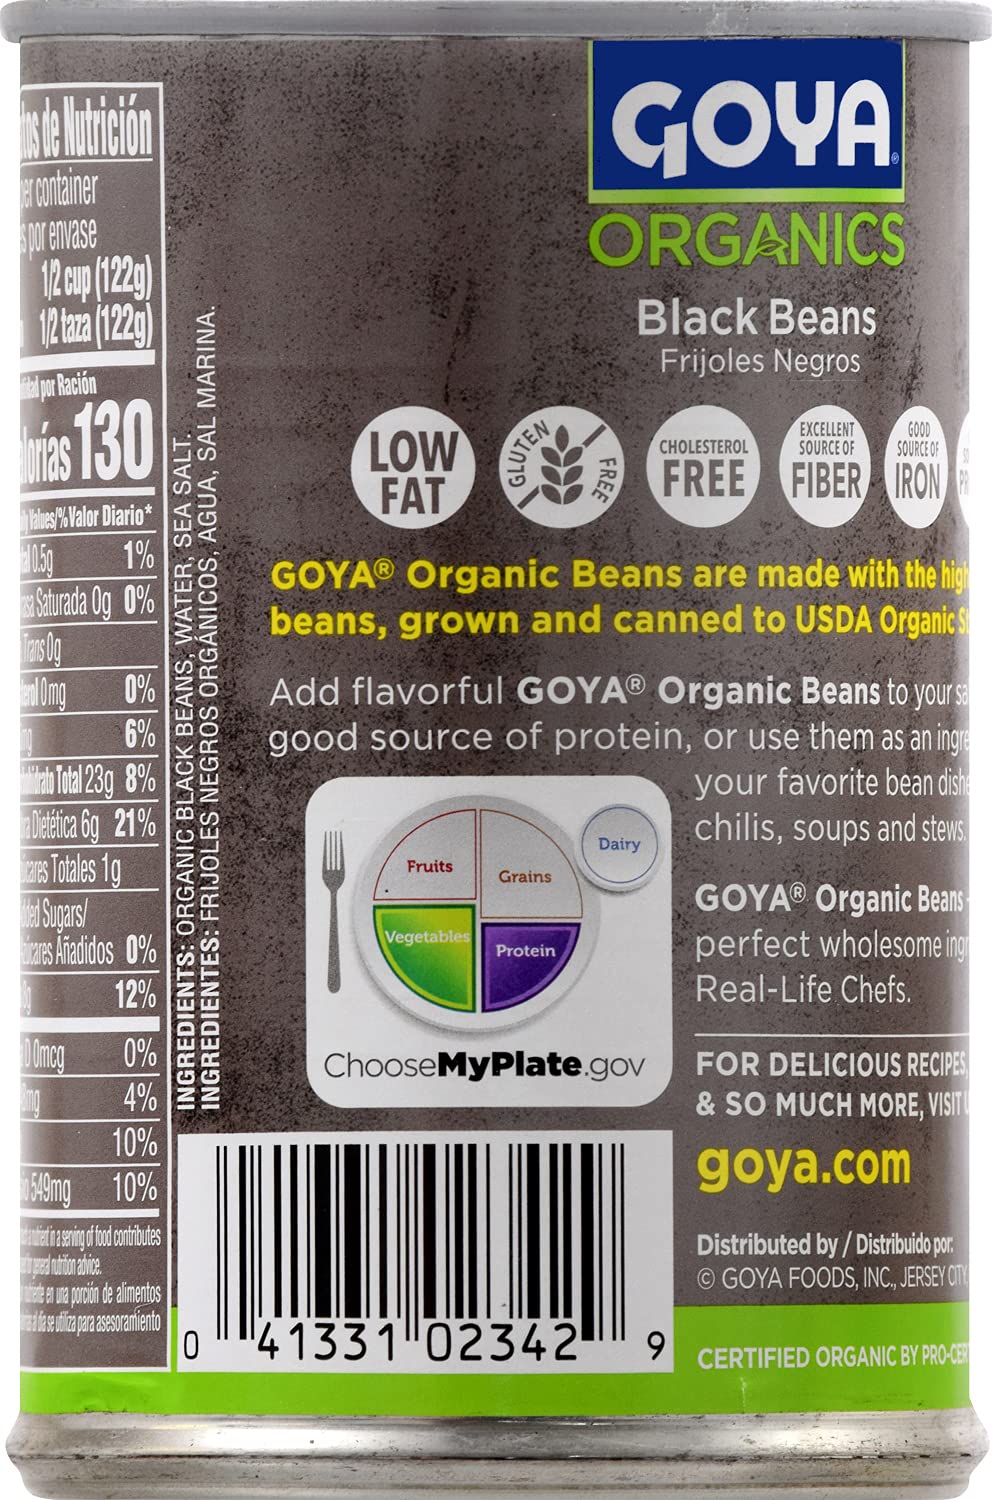 Goya Foods Organic Black Beans, 15.5 Ounce (Pack of 24)